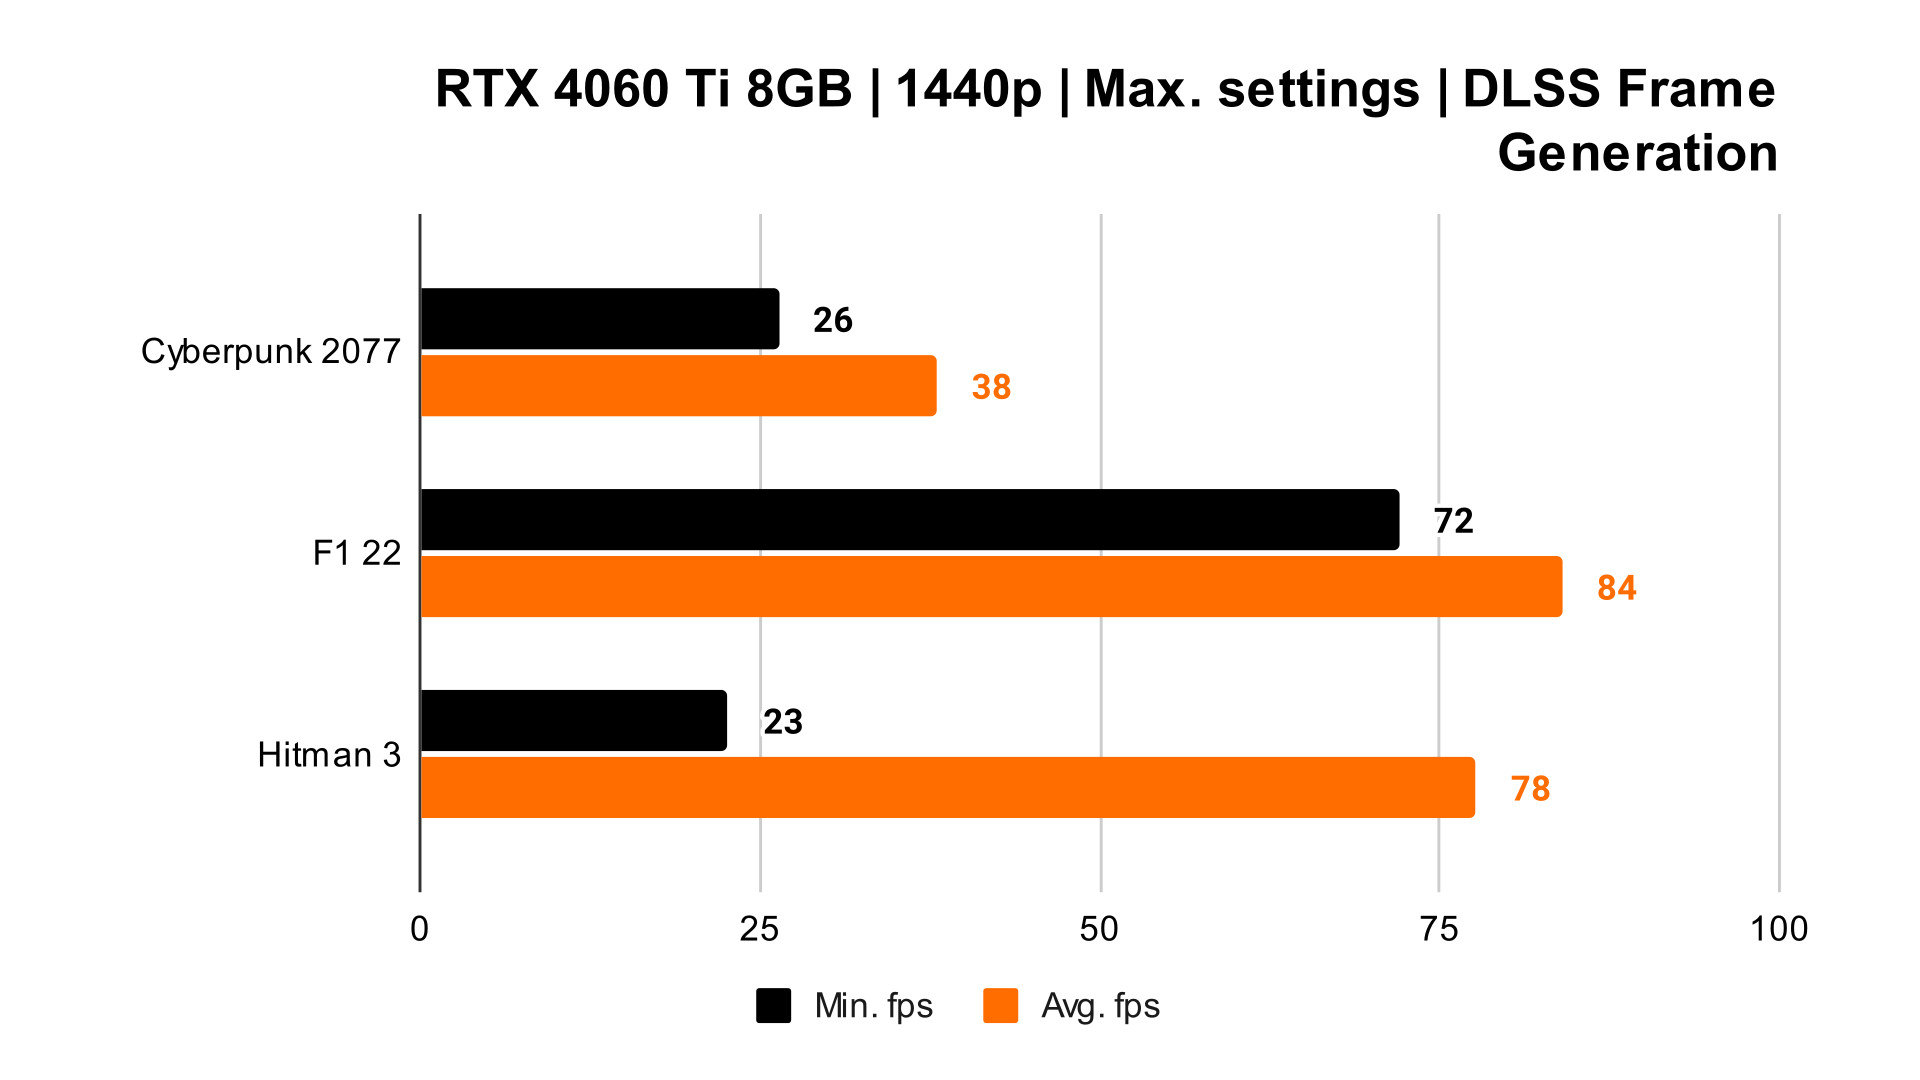 RTX 4060 8GB vs RTX 3060 12GB vs RTX 3060 8GB